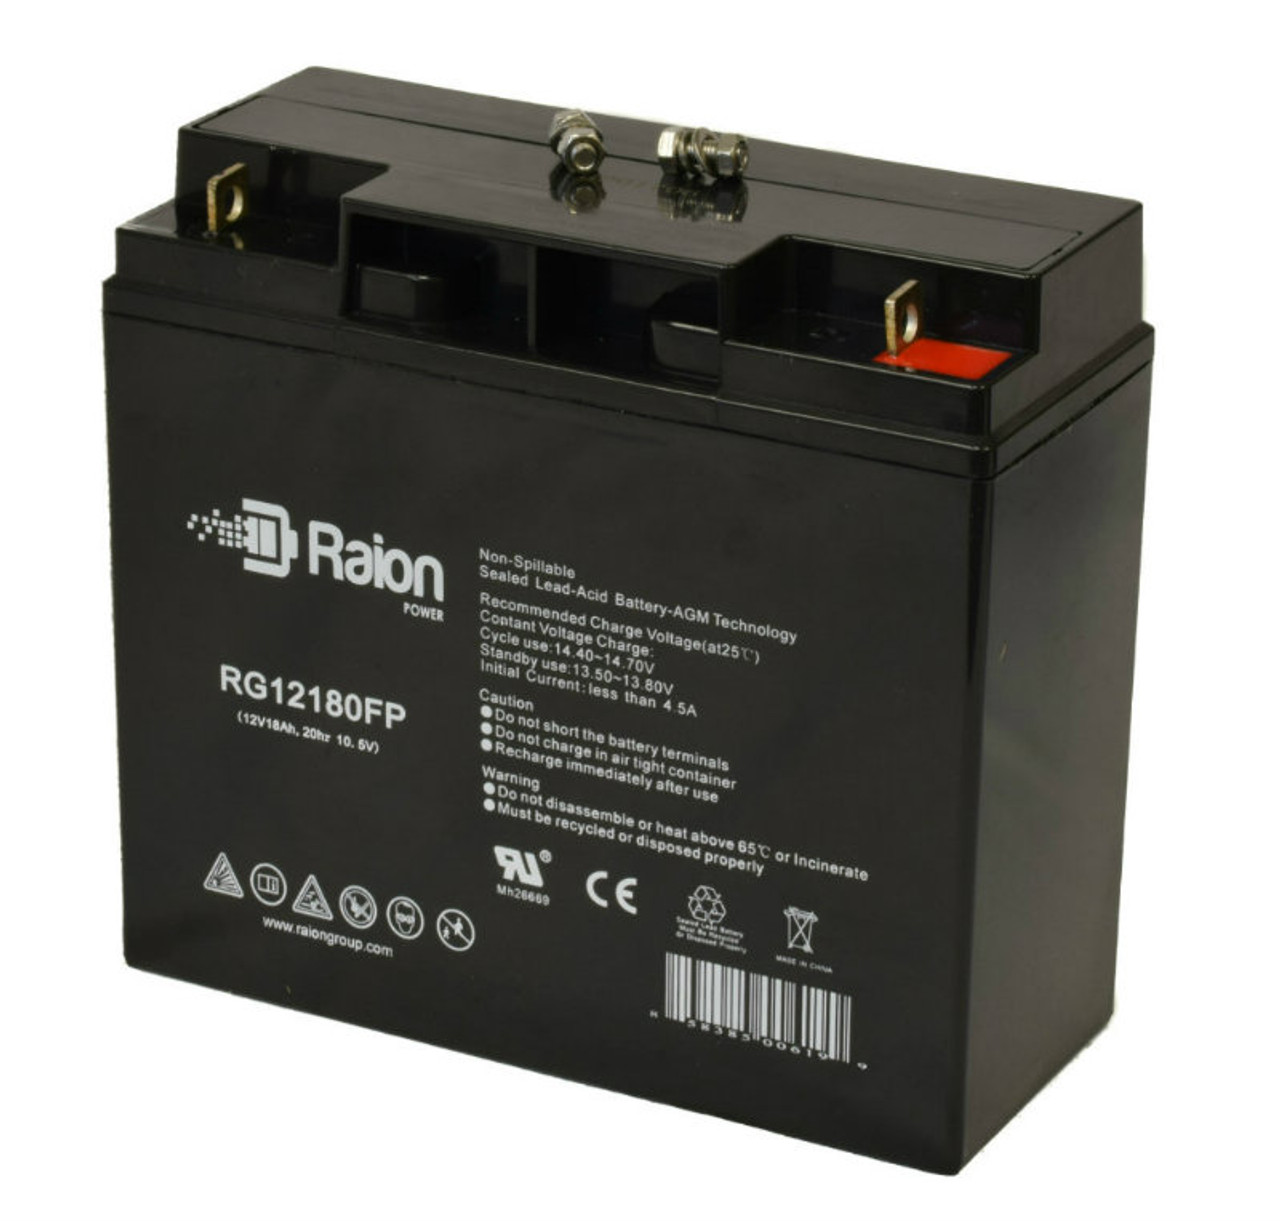 Raion Power RG12180FP 12V 18Ah Lead Acid Battery for Duracell PowerSource 1800